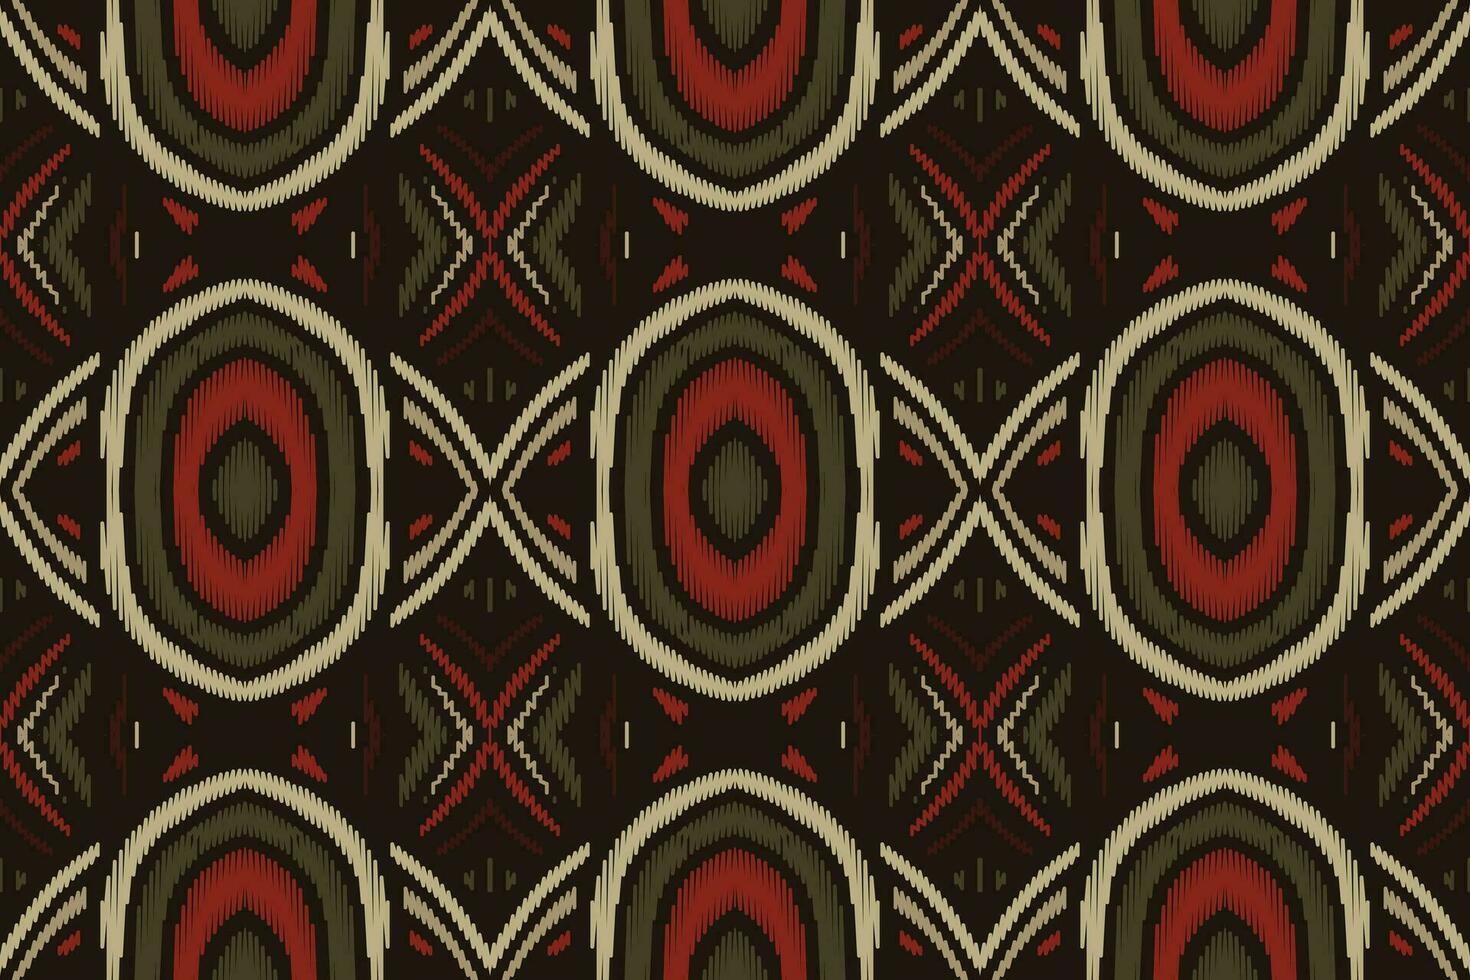 motivo ikat cachemir bordado antecedentes. ikat azteca geométrico étnico oriental modelo tradicional. ikat azteca estilo resumen diseño para impresión textura,tela,sari,sari,alfombra. vector